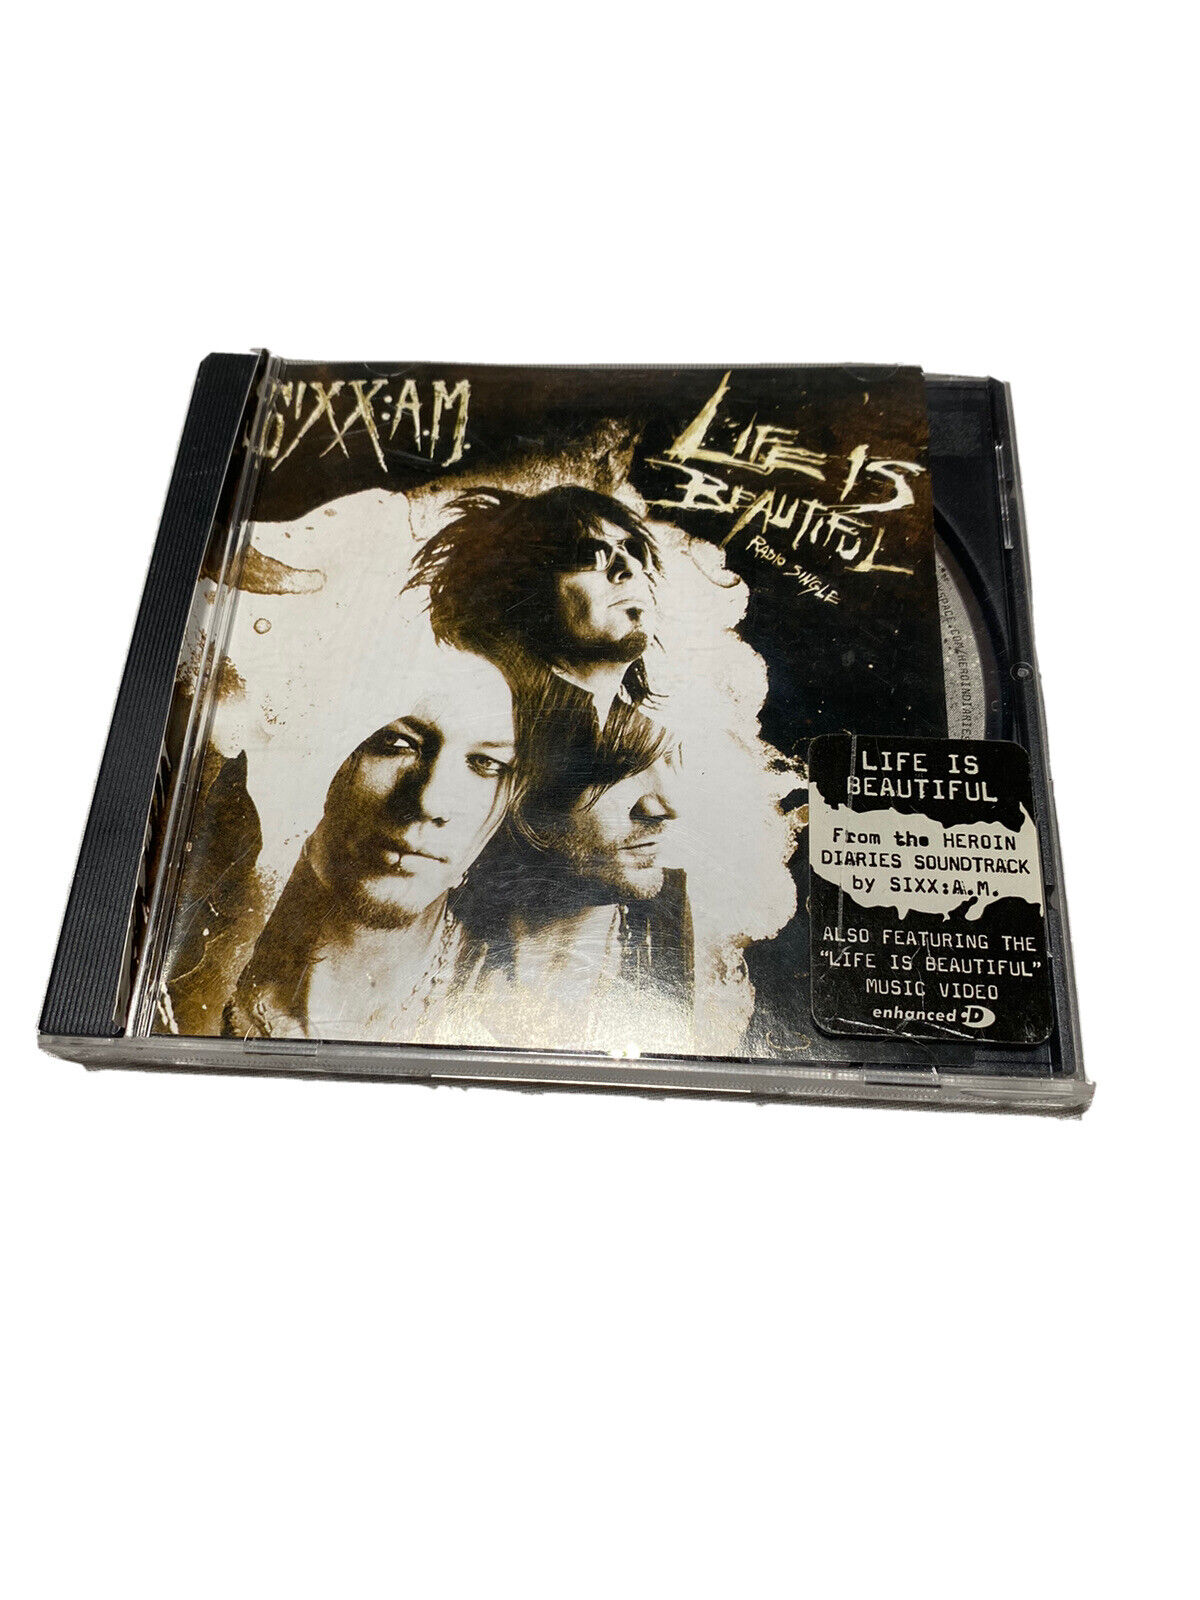 Sixx: AM Life is Beautiful Cd Radio Single Promo diaries soundtrack Motley Crue